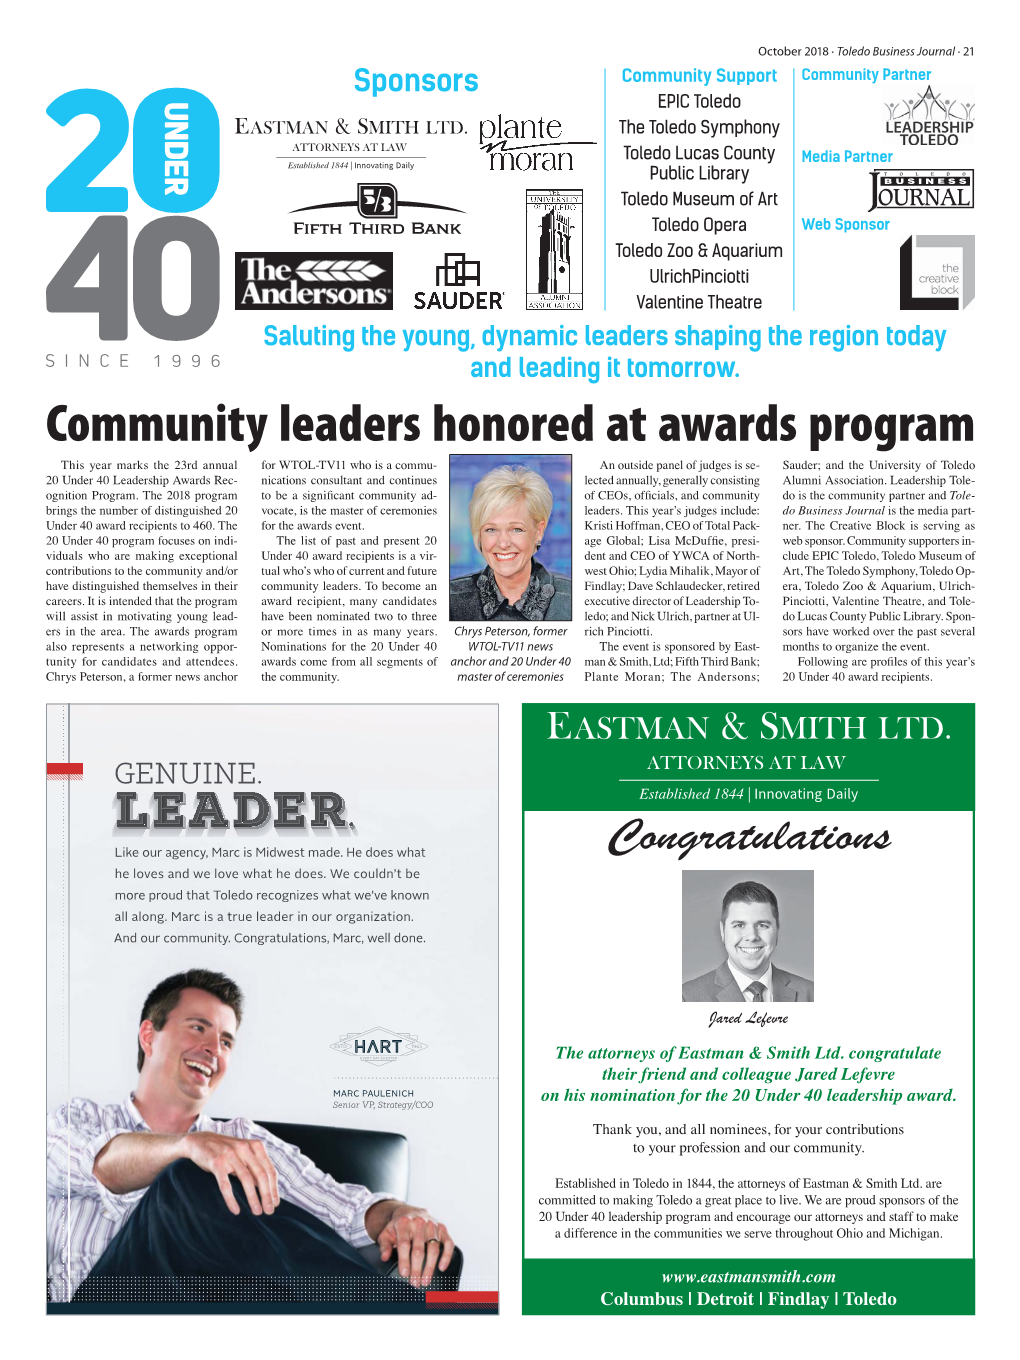 Community Leaders Honored at Awards Program